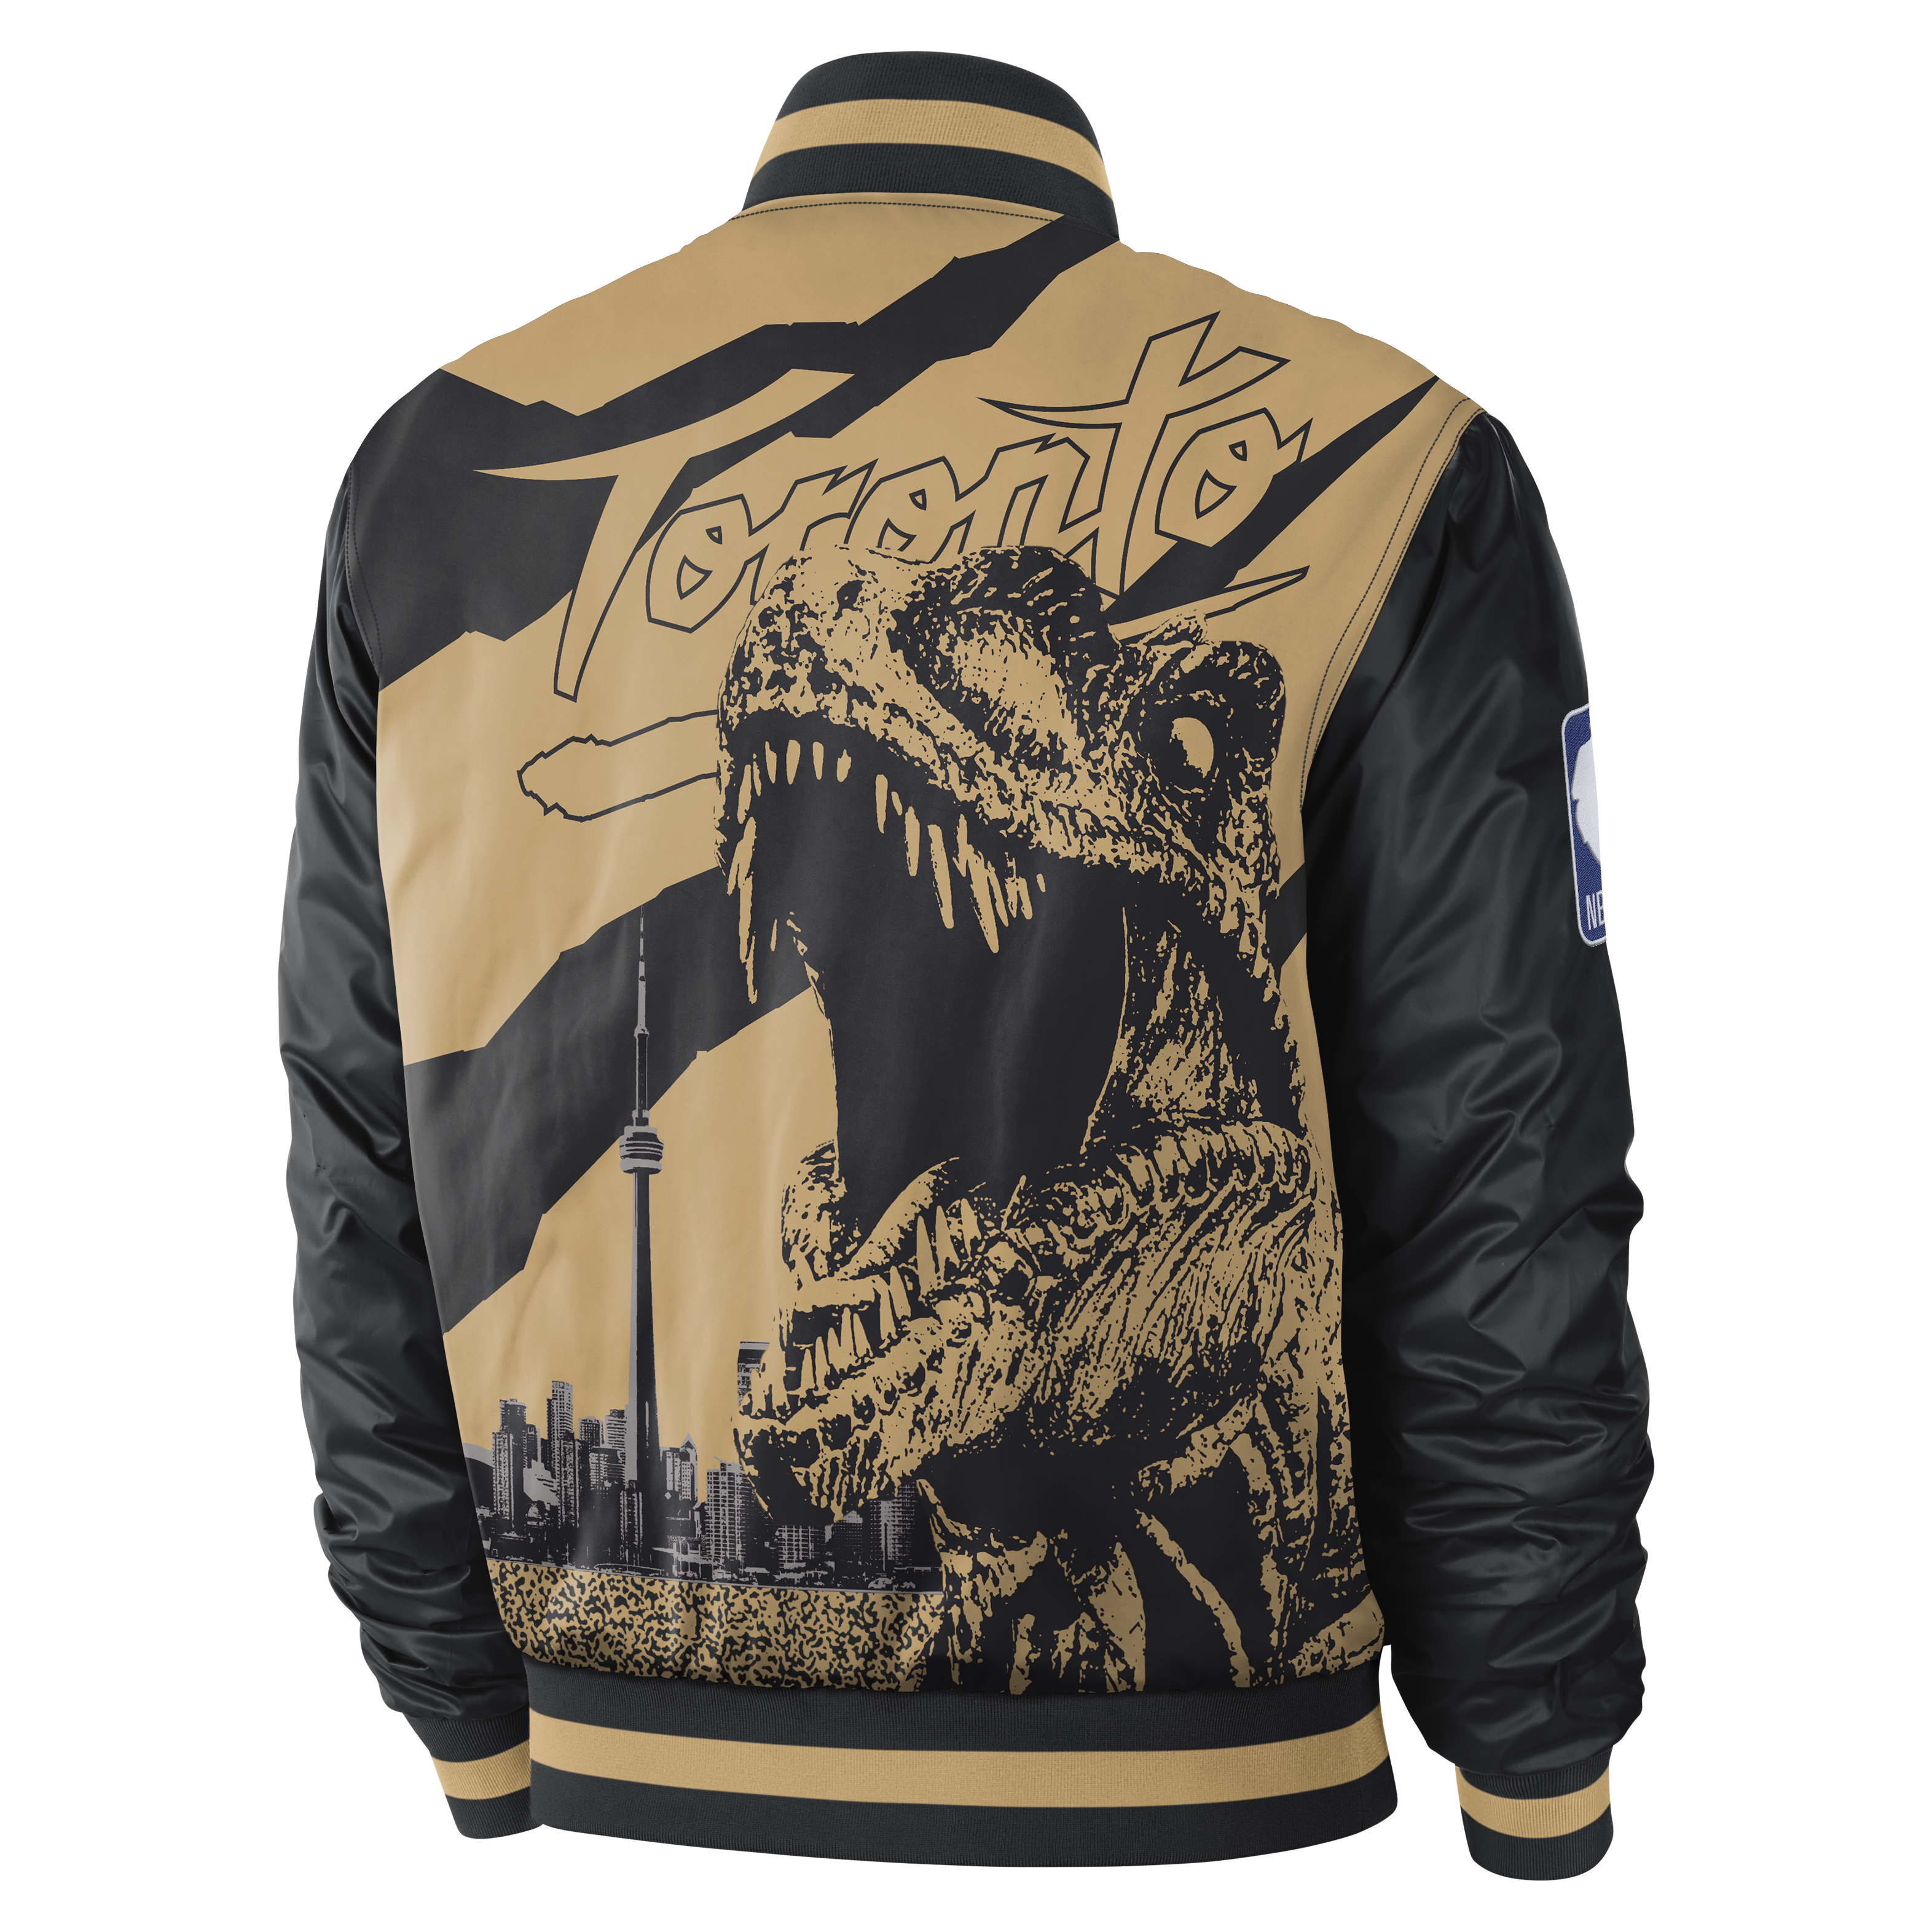 raptors courtside jacket